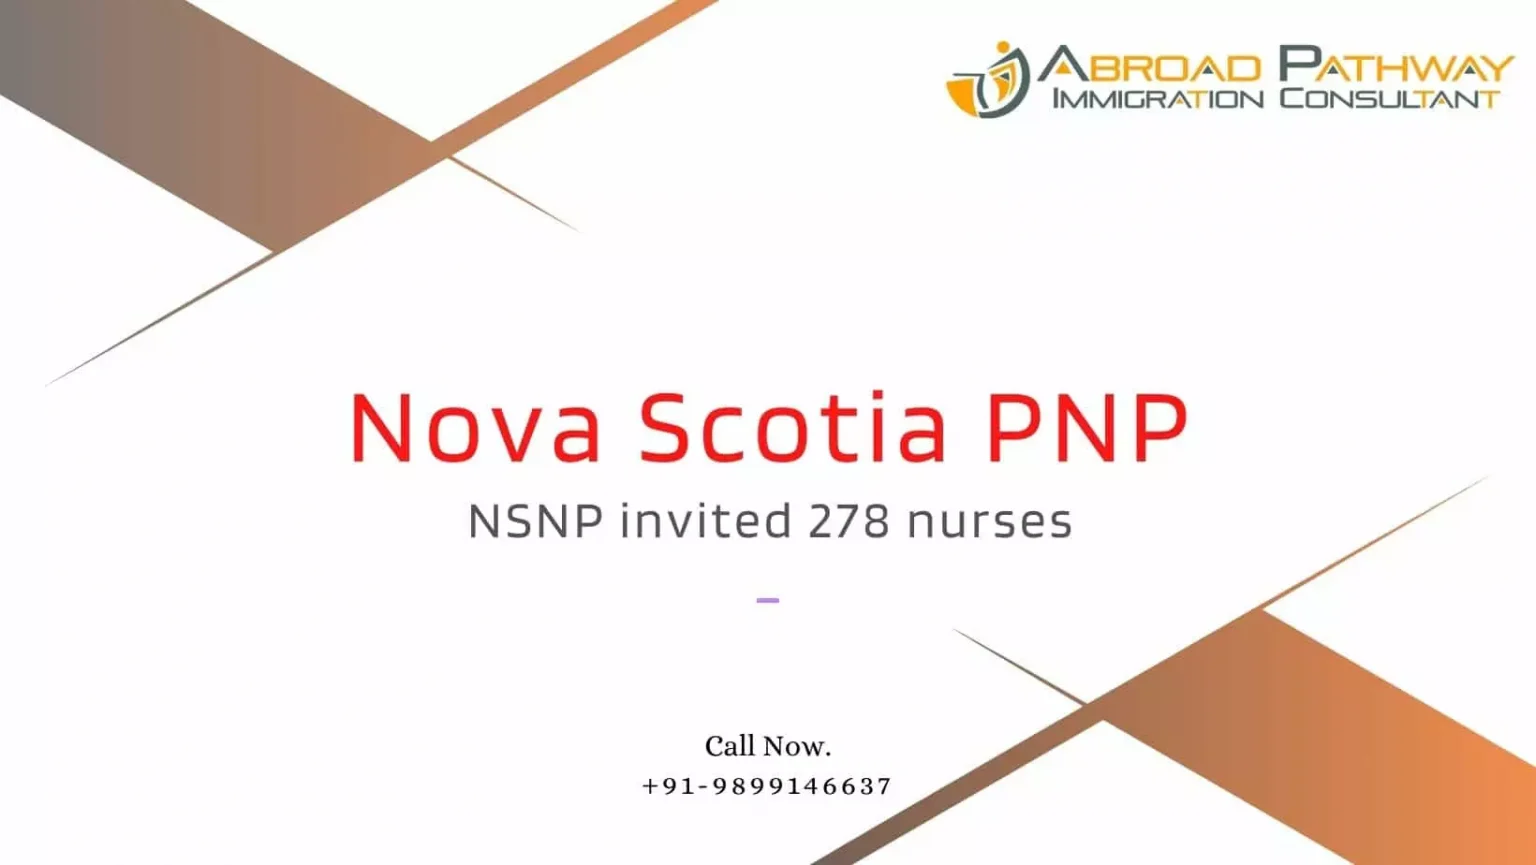 PNP draw for nurses held by Nova Scotia